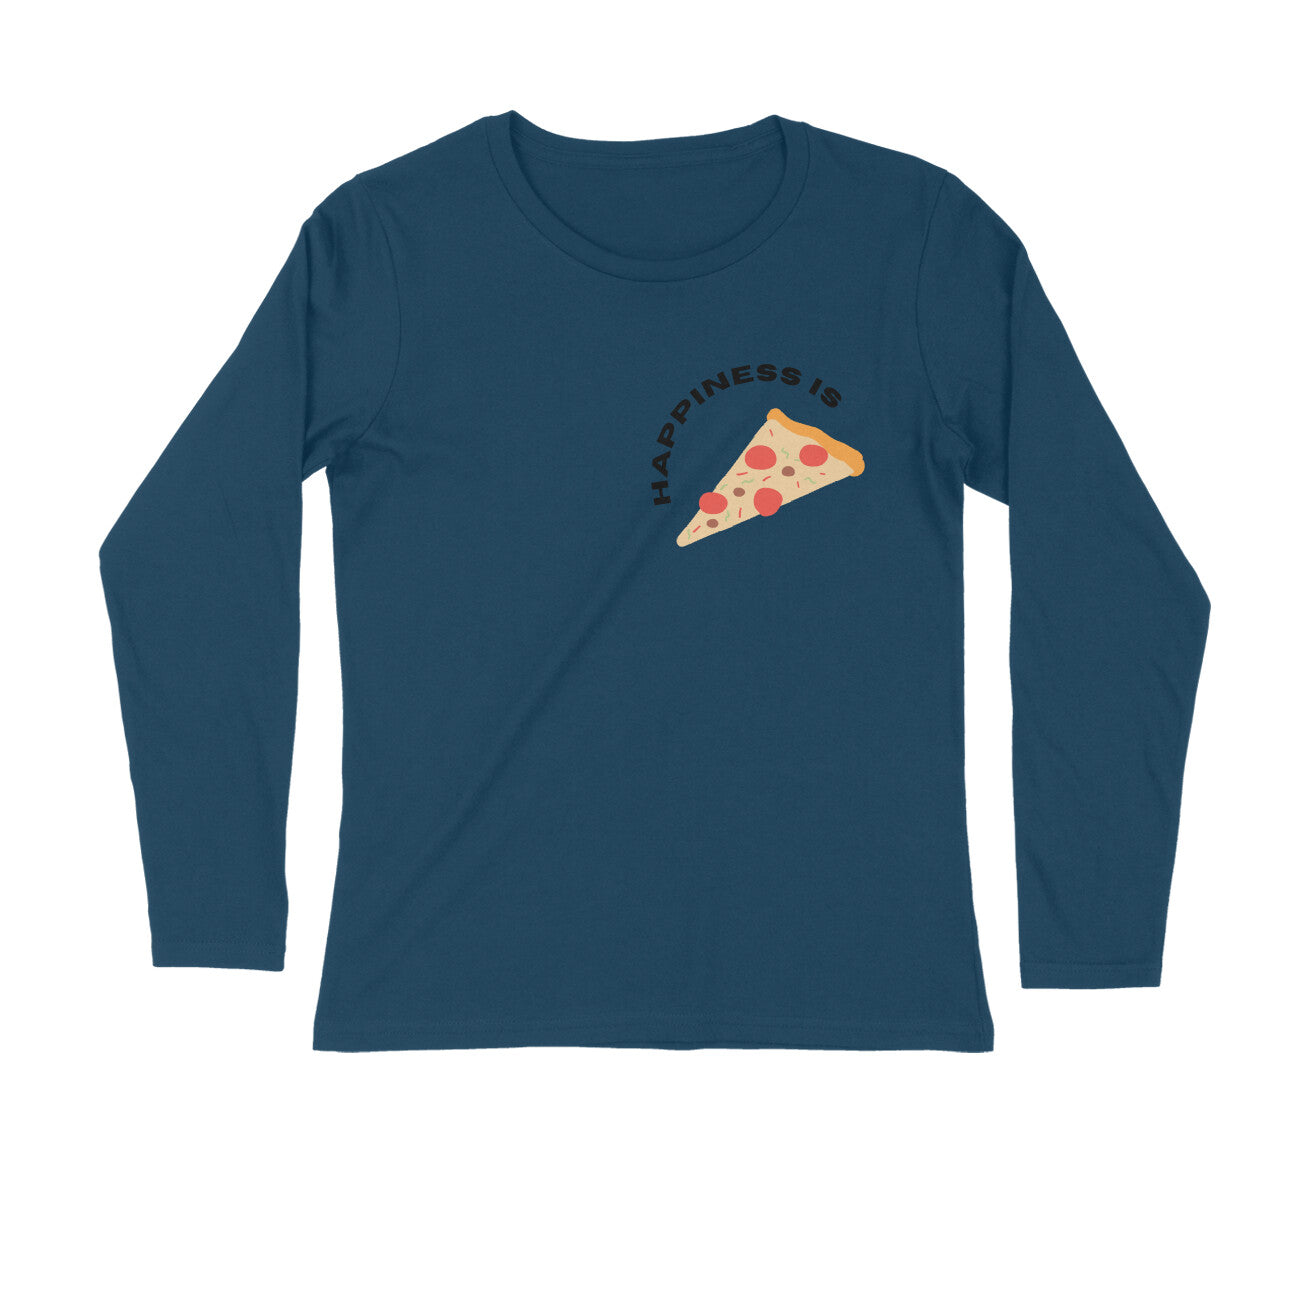 Happiness is Pizza - Long Sleeve Unisex Tshirt